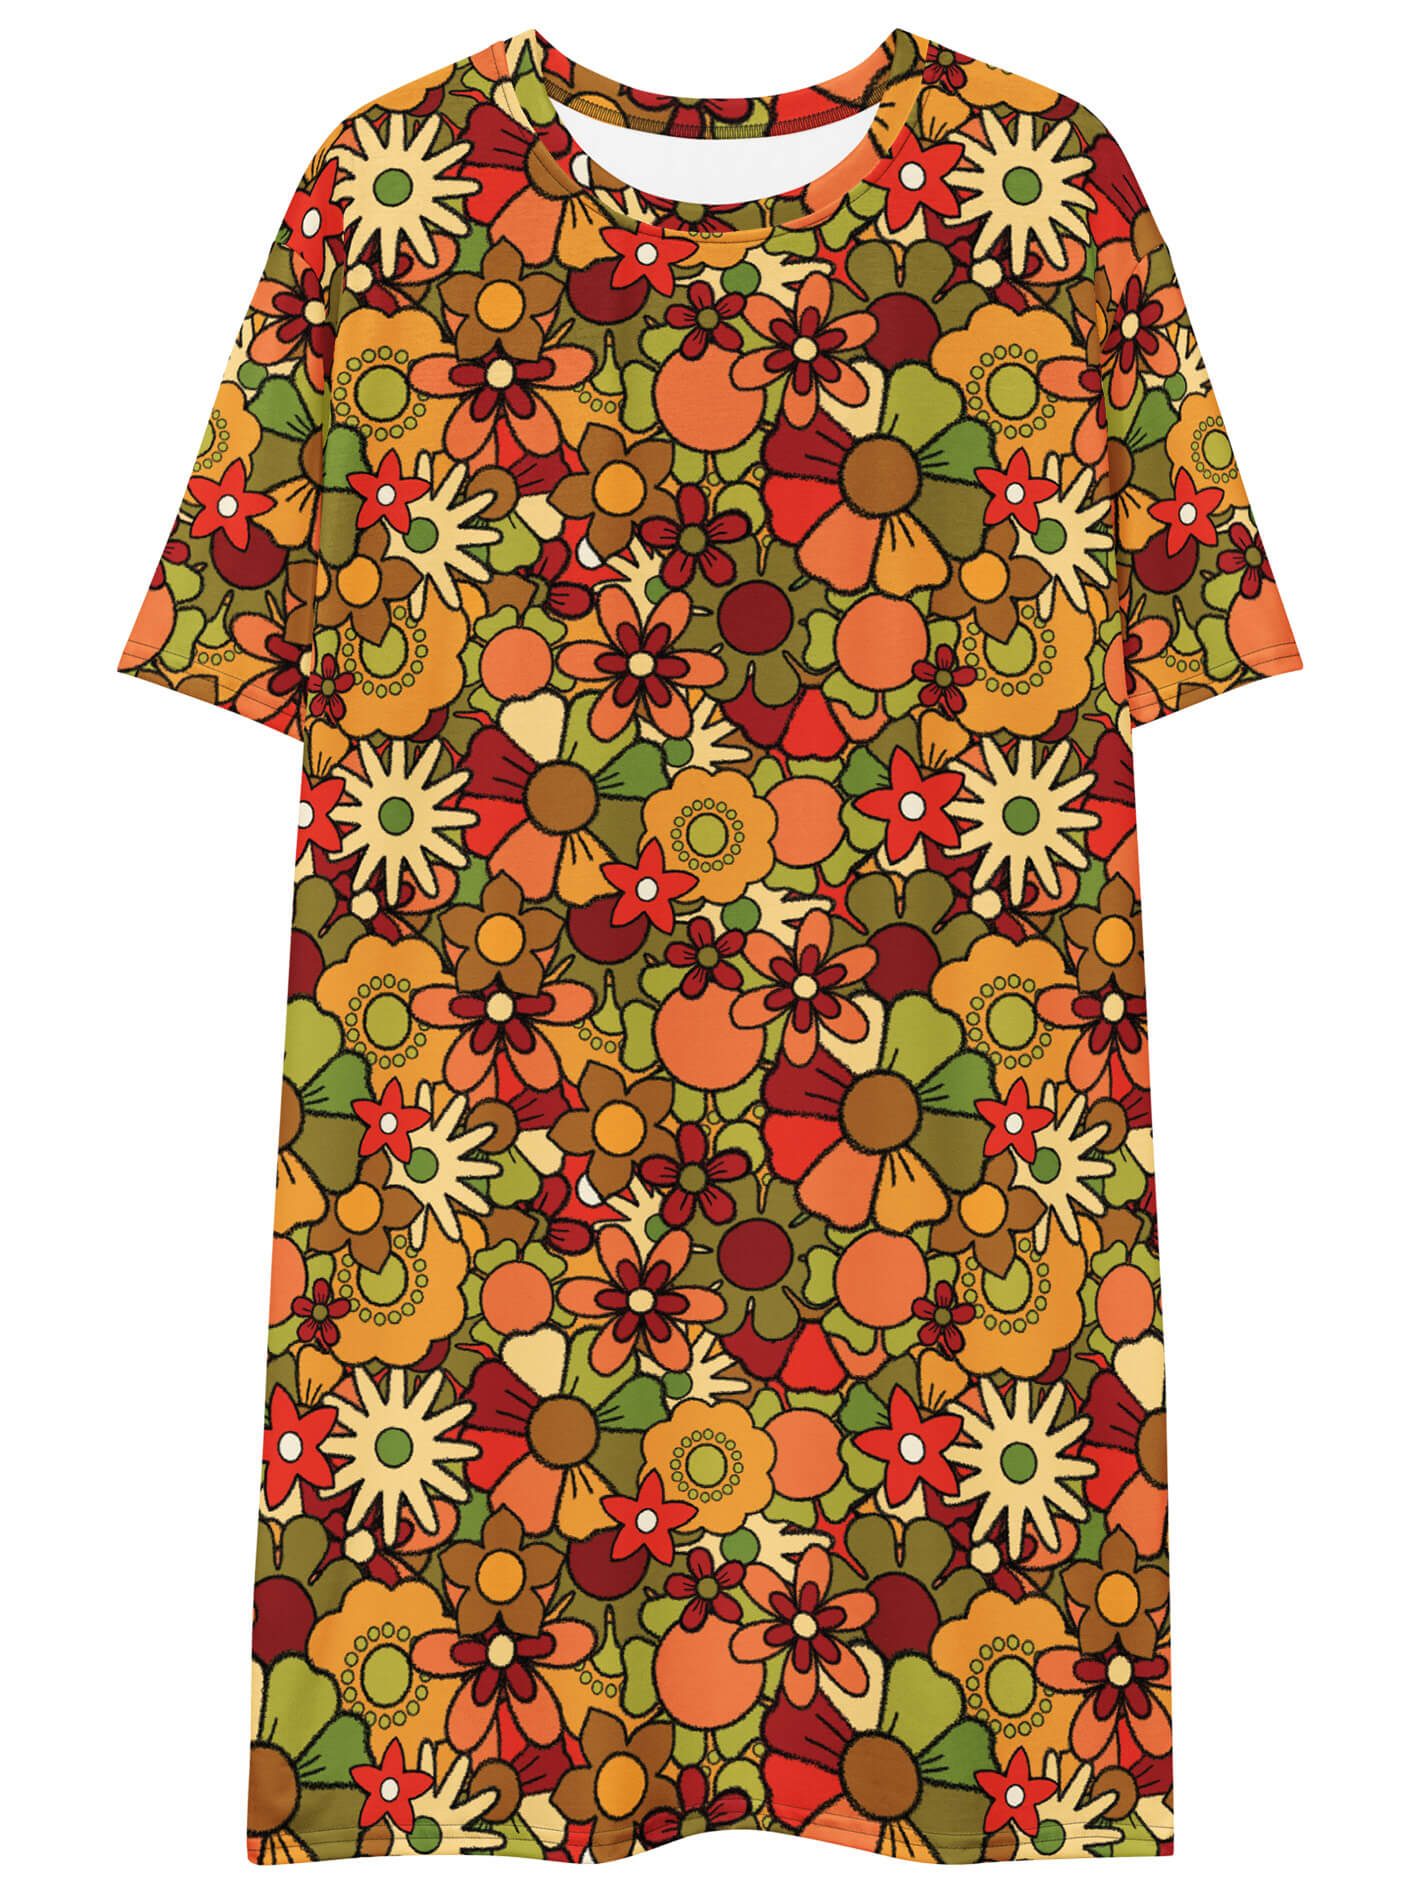 70s retro flower t-shirt dress.